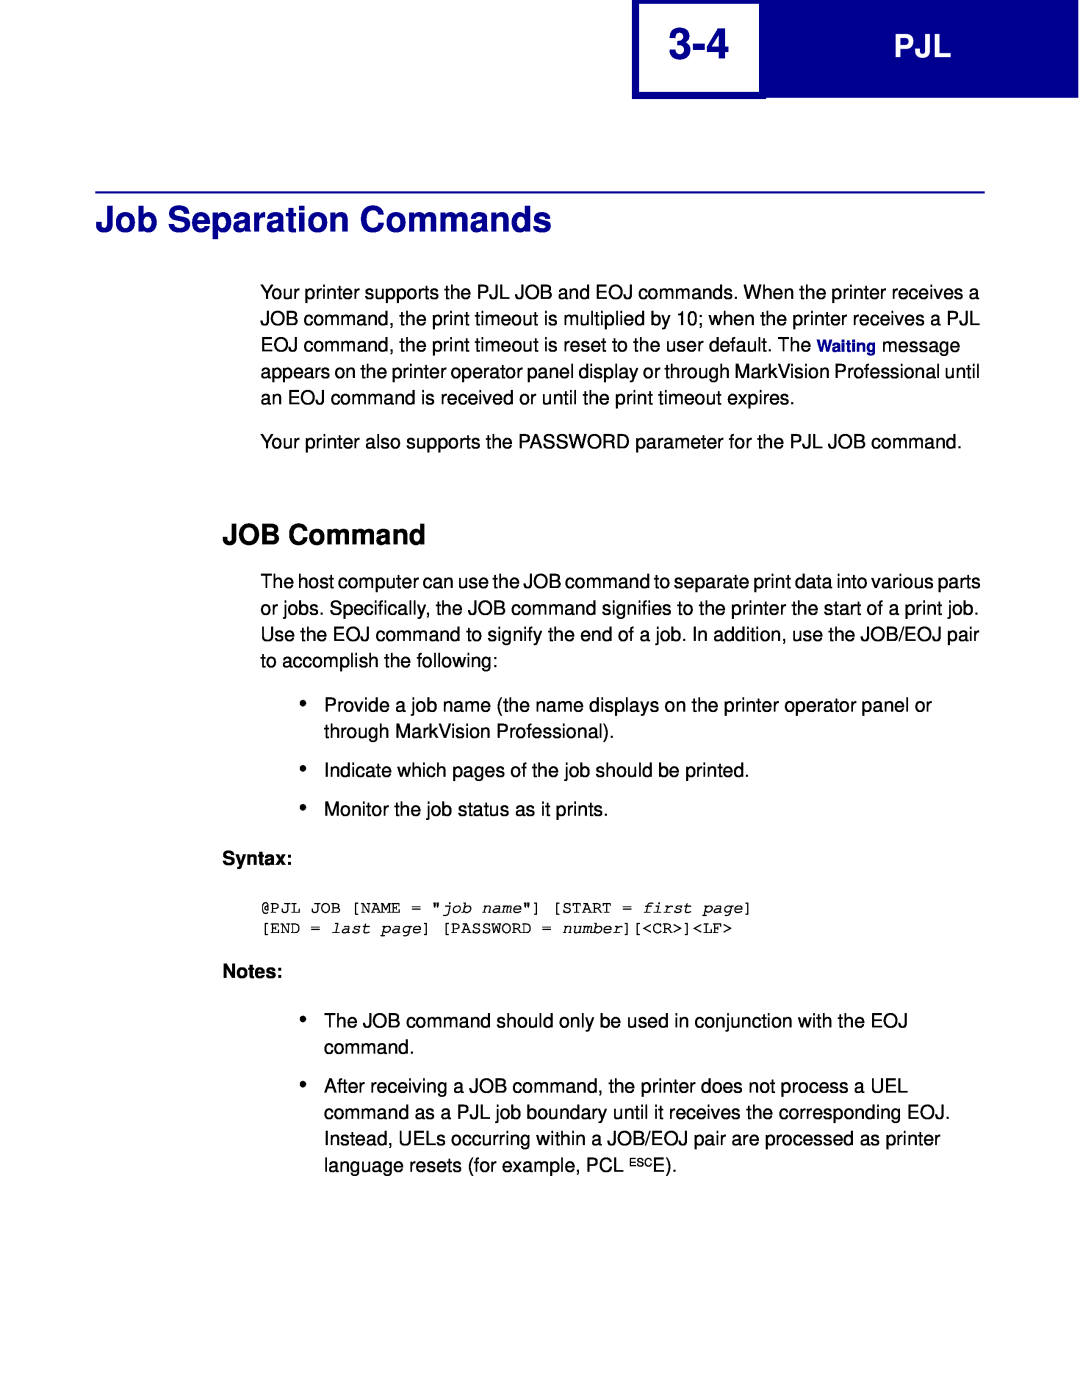 Lexmark C762, C760 manual Job Separation Commands, JOB Command, Syntax 